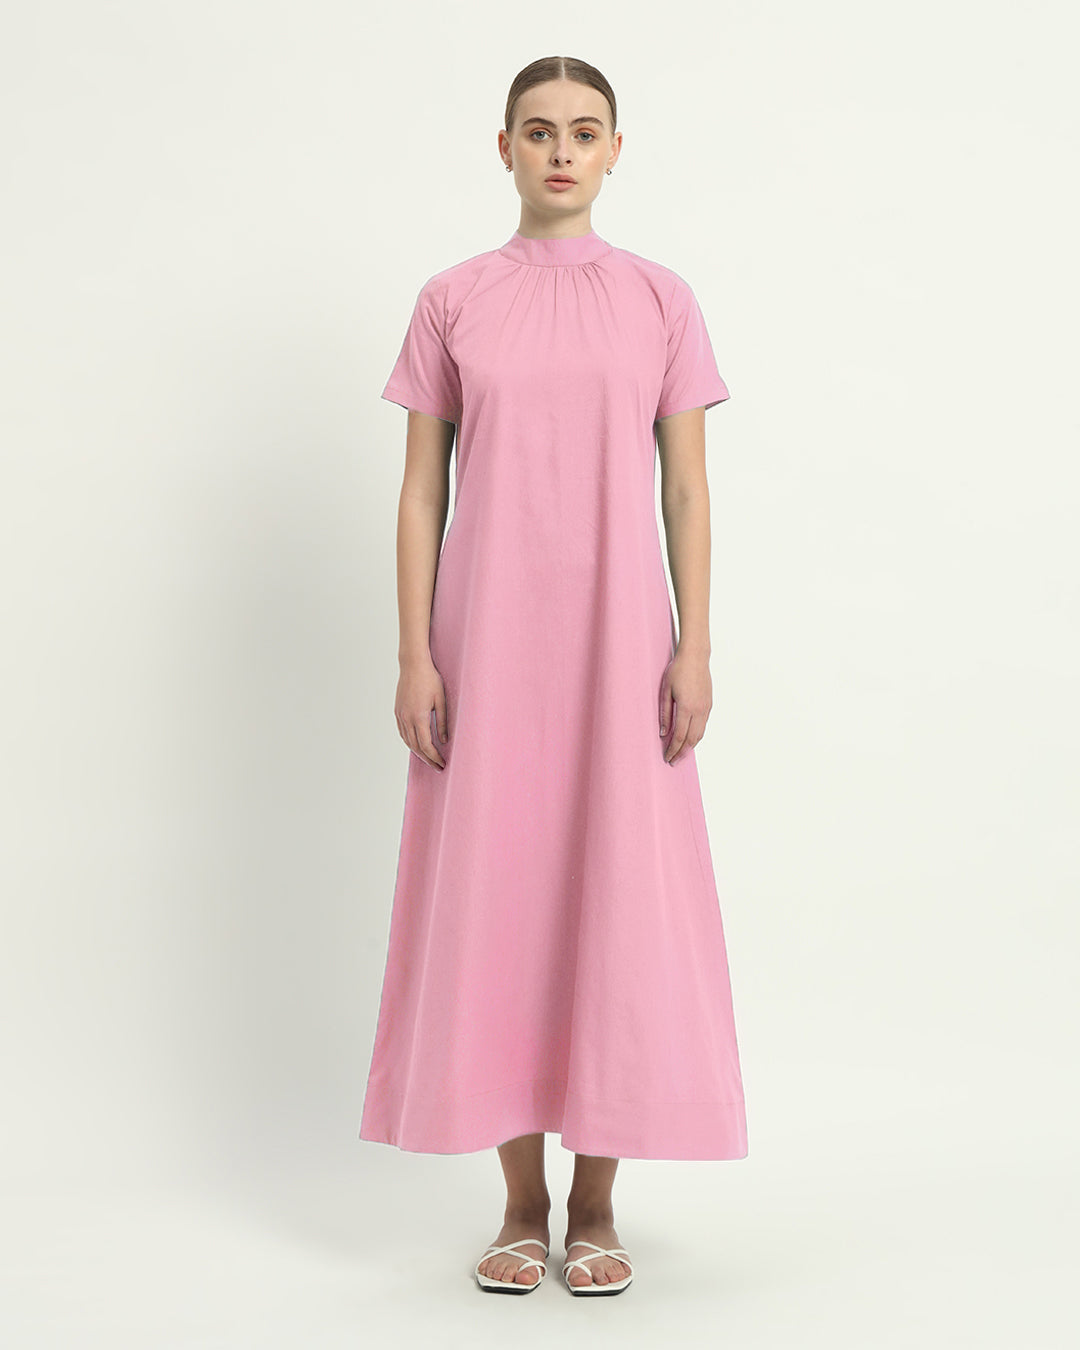 The Fondant Pink Hermon Cotton Dress